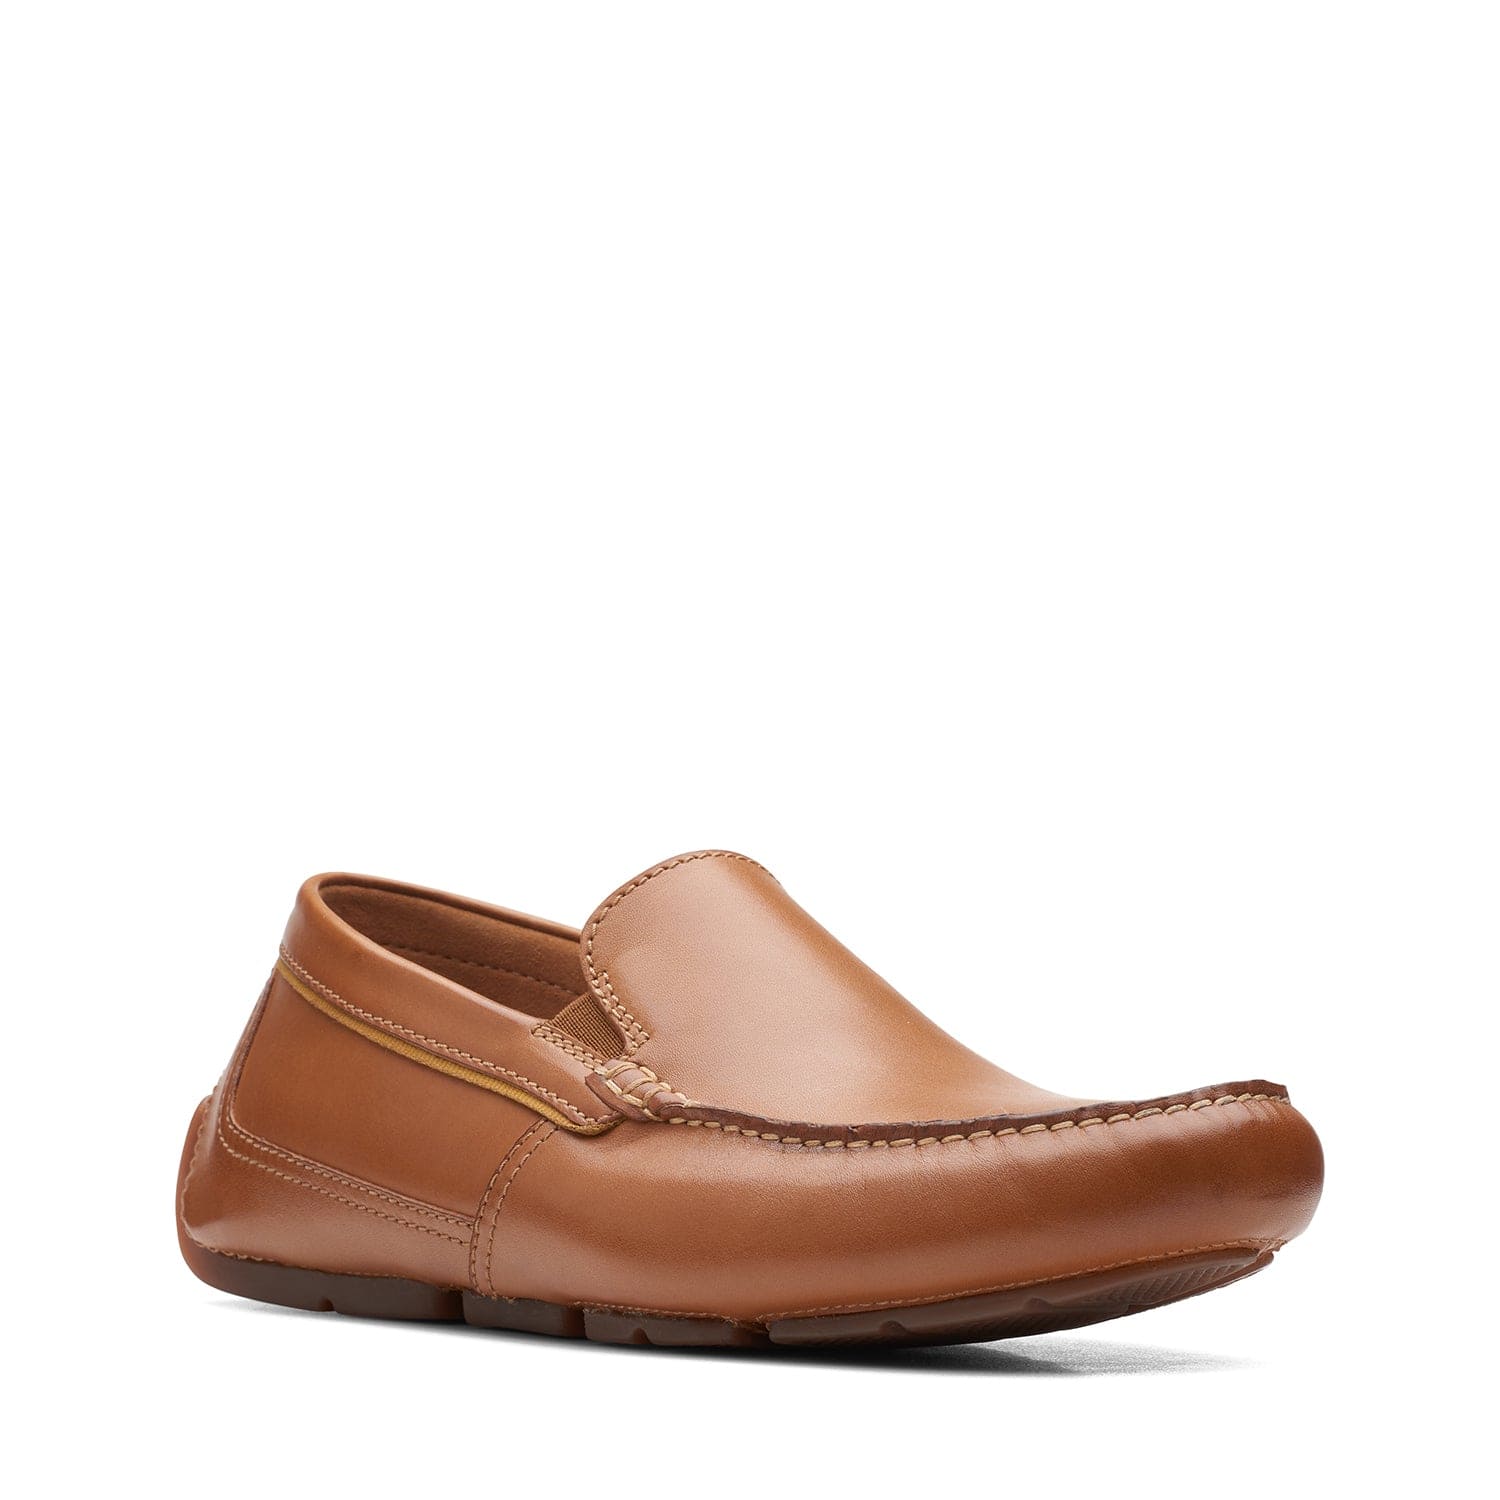 Clarks Markman Plain - Shoes - Tan Leather - 261635447 - G Width (Standard Fit)